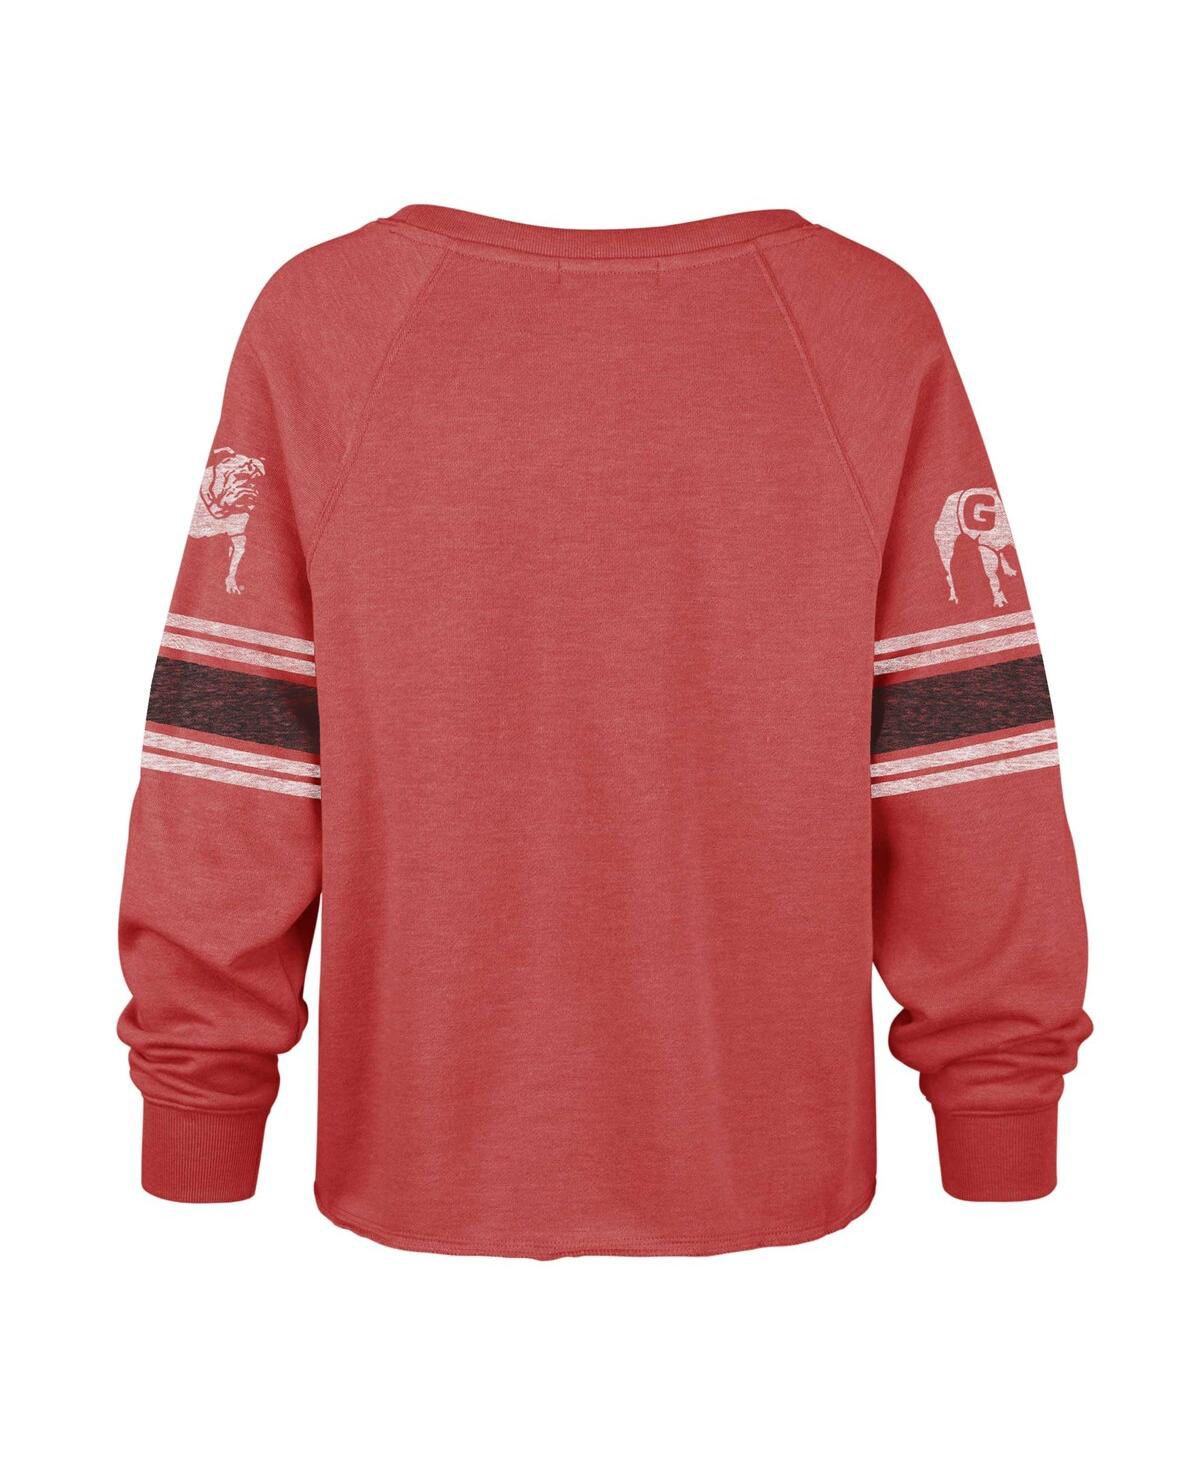 Shop 47 Brand Women's ' Red Distressed Georgia Bulldogs Allie Modest Raglan Long Sleeve Cropped T-shirt